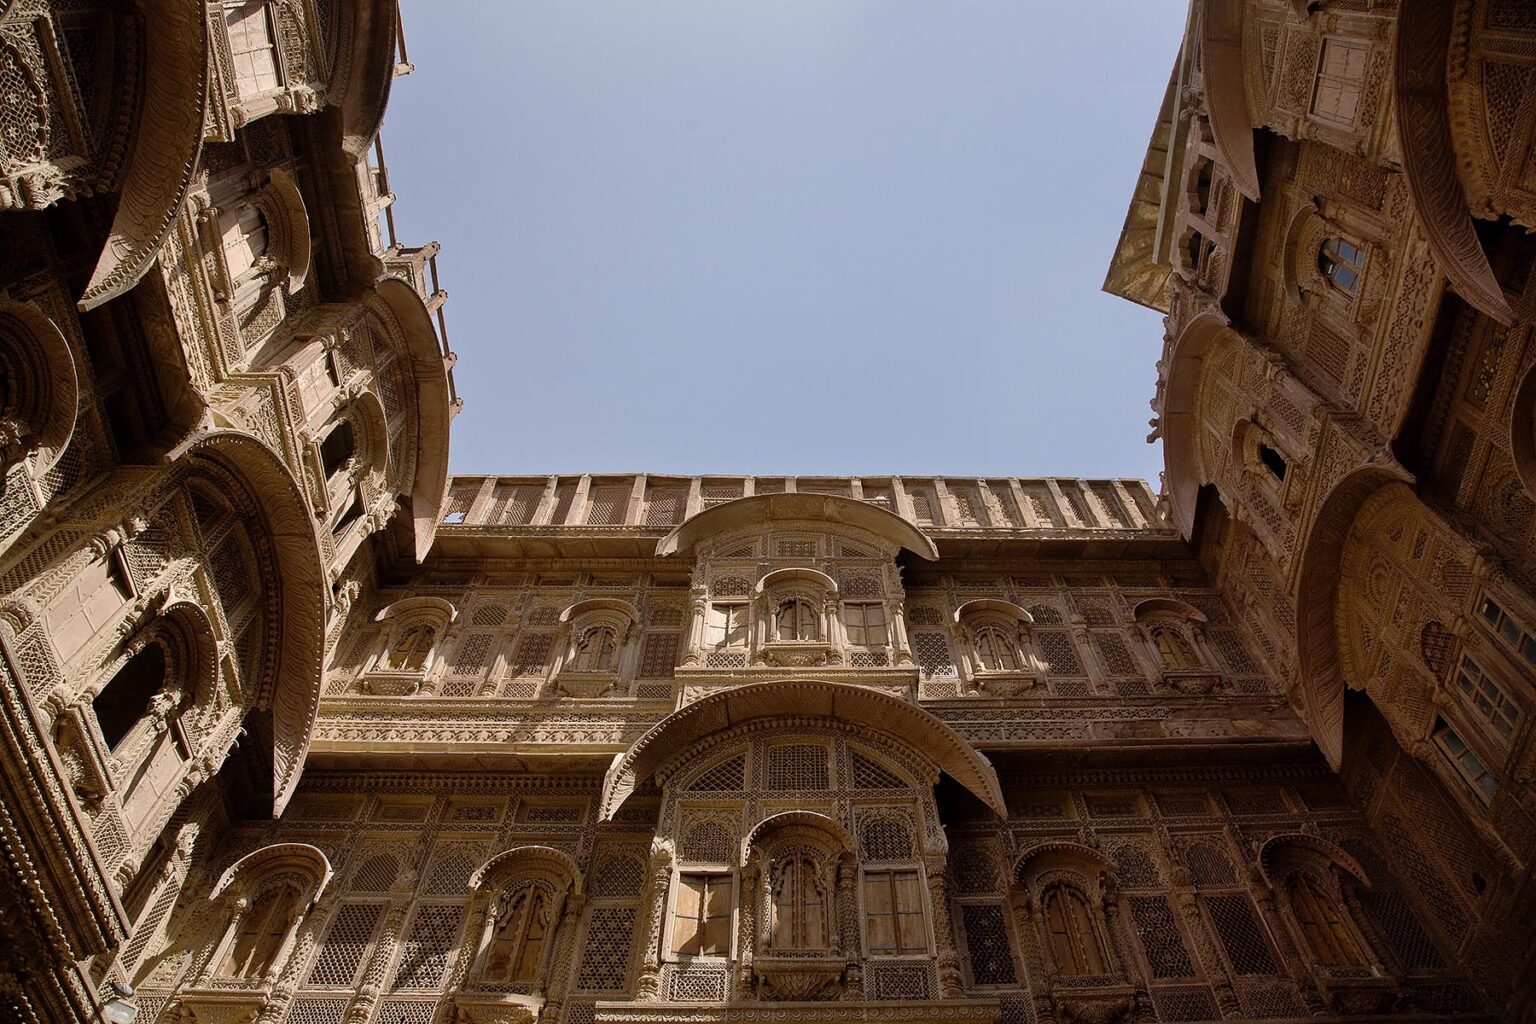 The courtyard of HOLI CHOWK in the MEHERANGARH FORT built by Maharaja Man Singh in 1806 - JOHDPUR, RAJASTHAN, INDIA